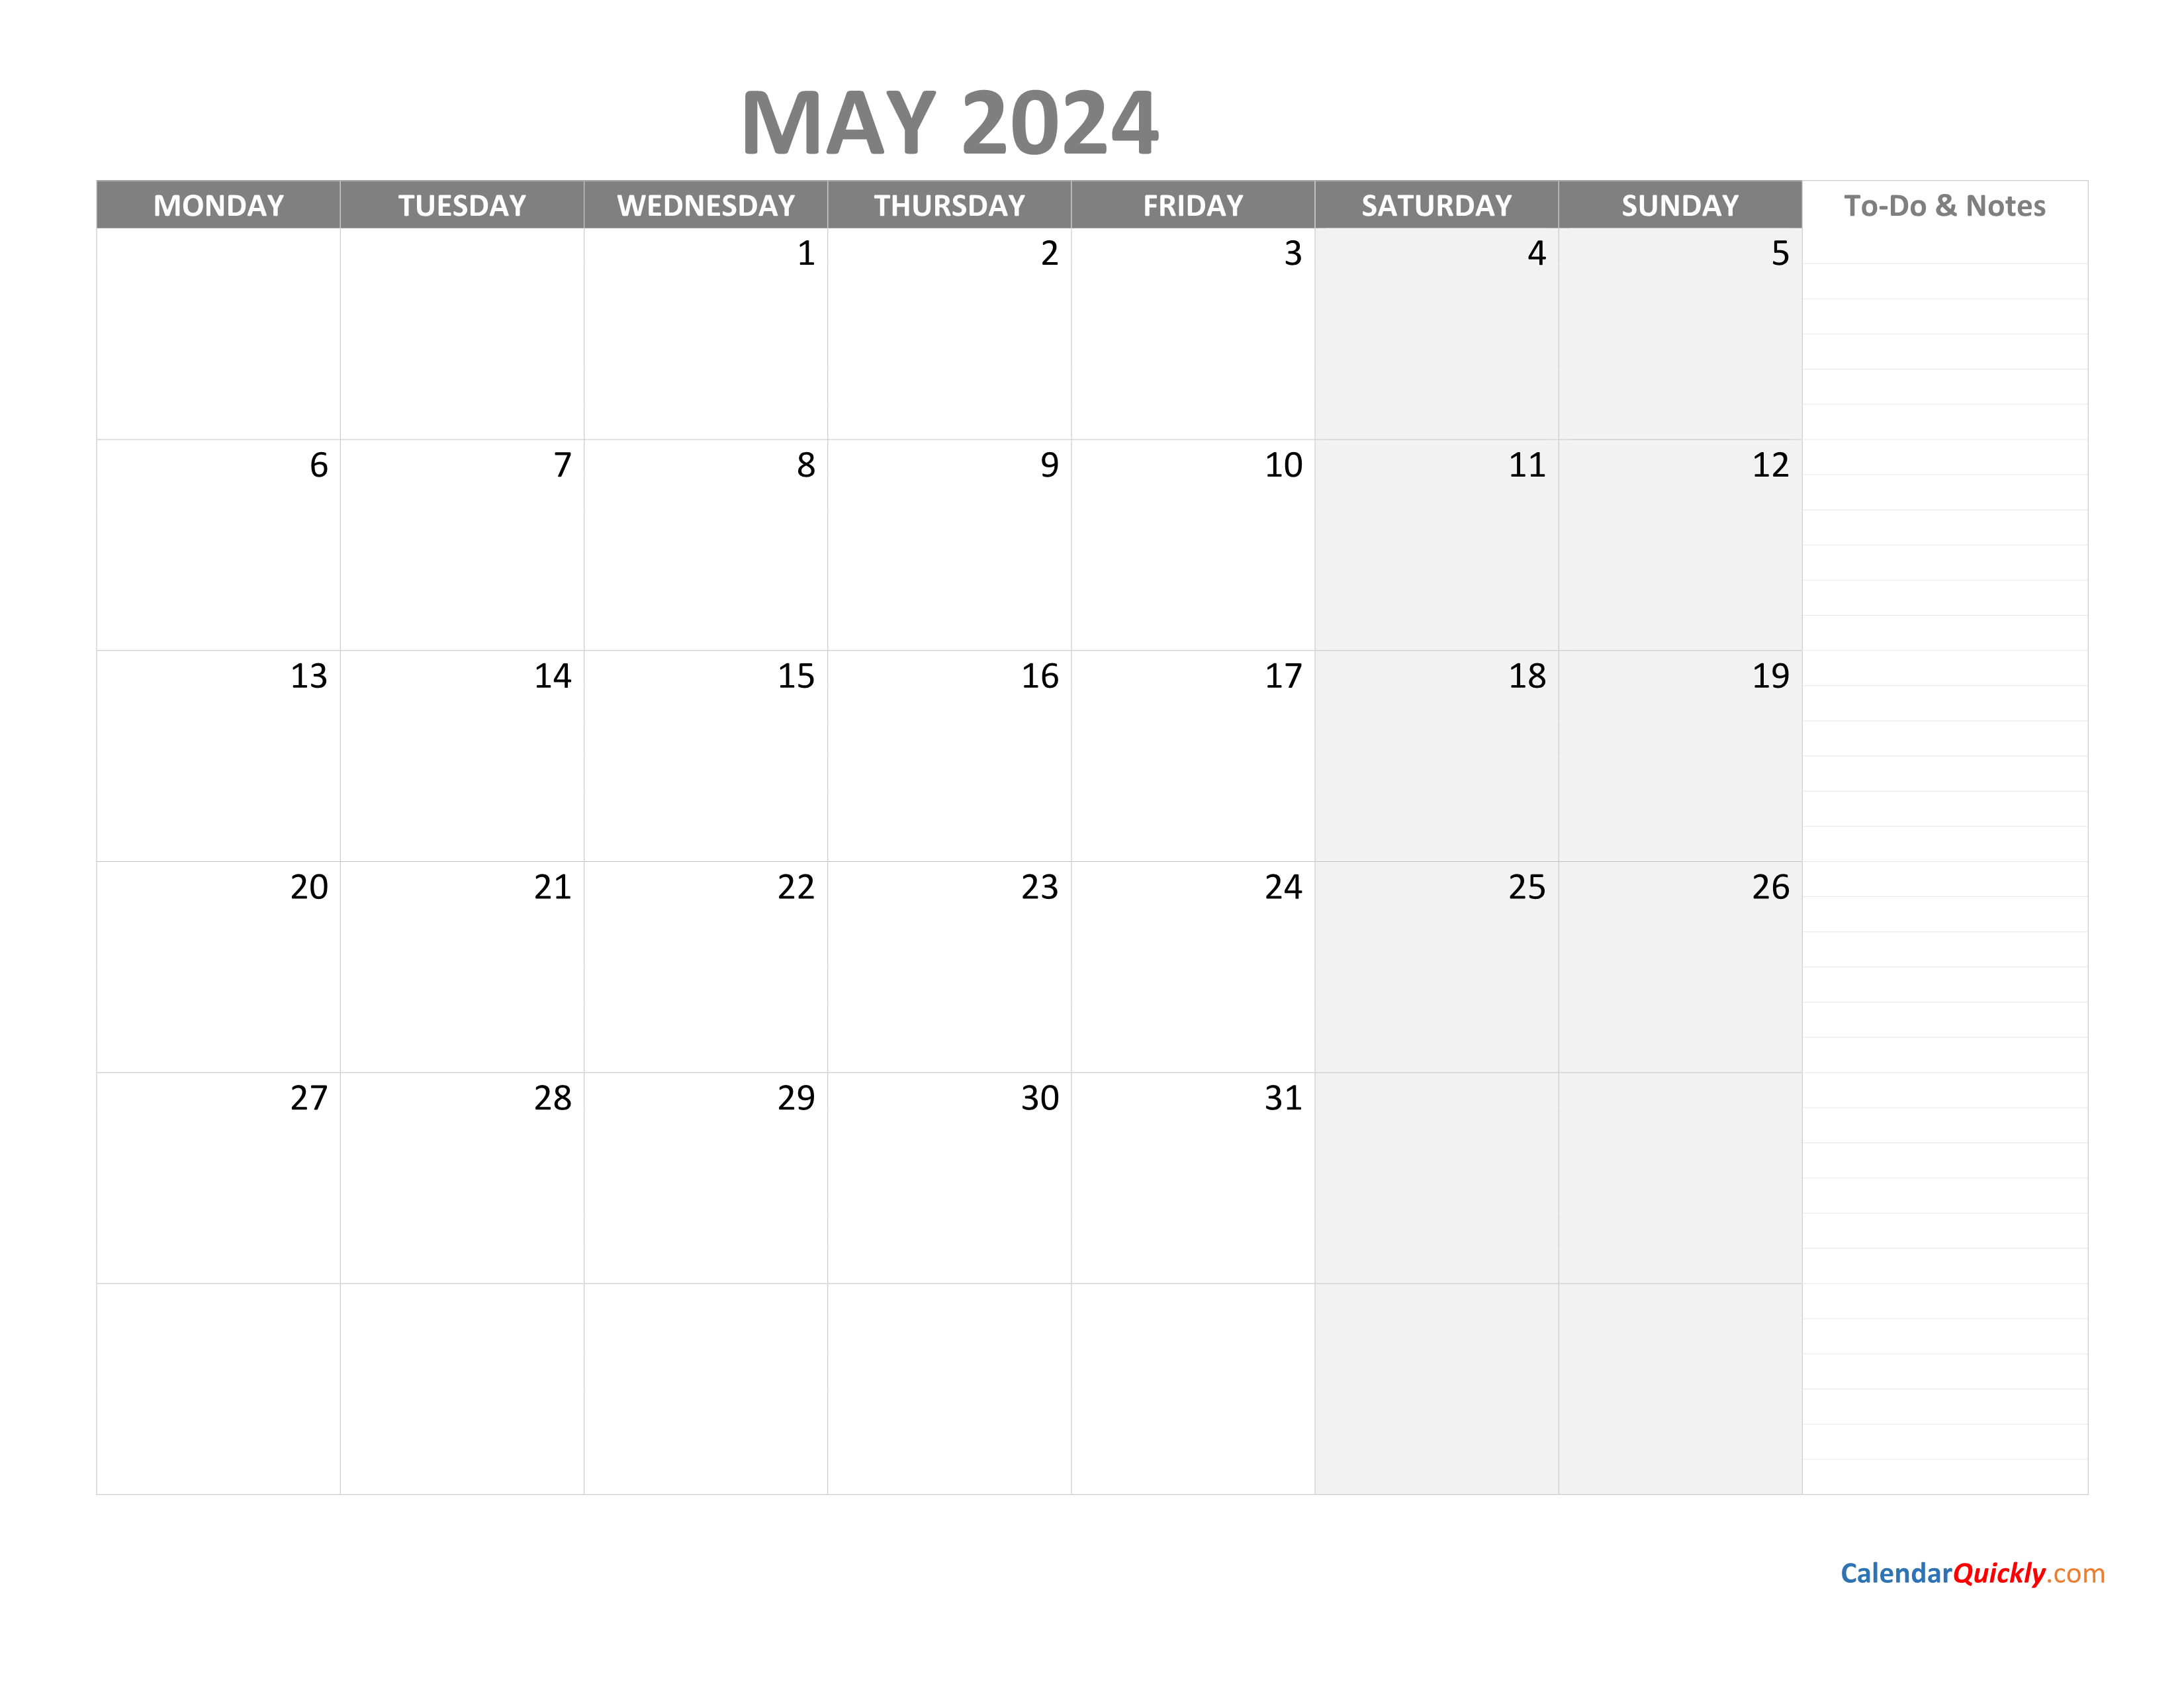 May Monday Calendar 2024 with Notes Calendar Quickly